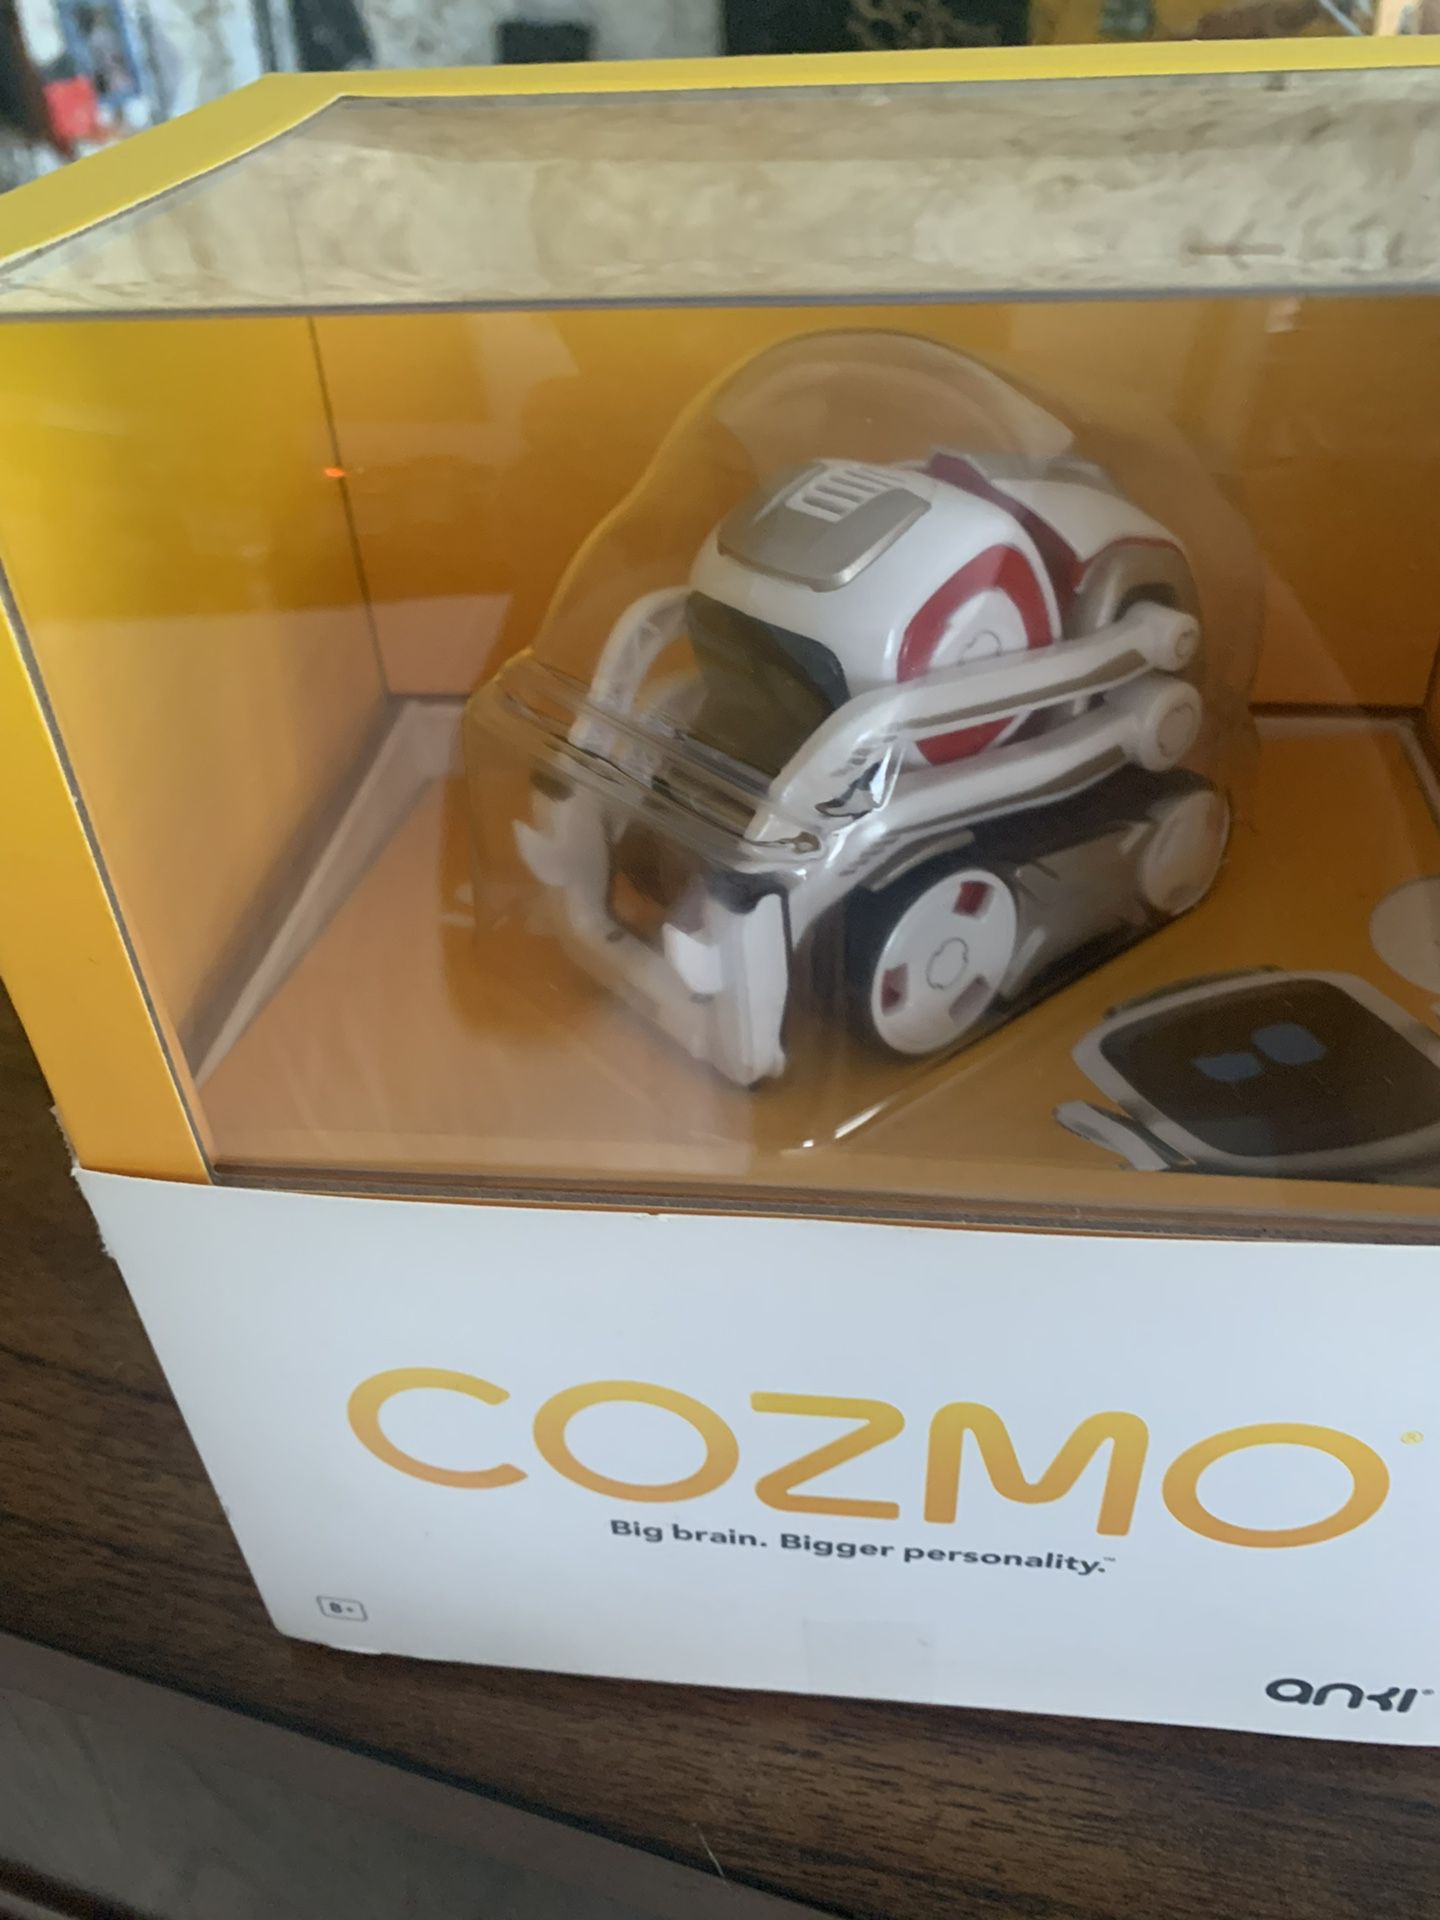 Anki Cozmo Robot Toy For Kids